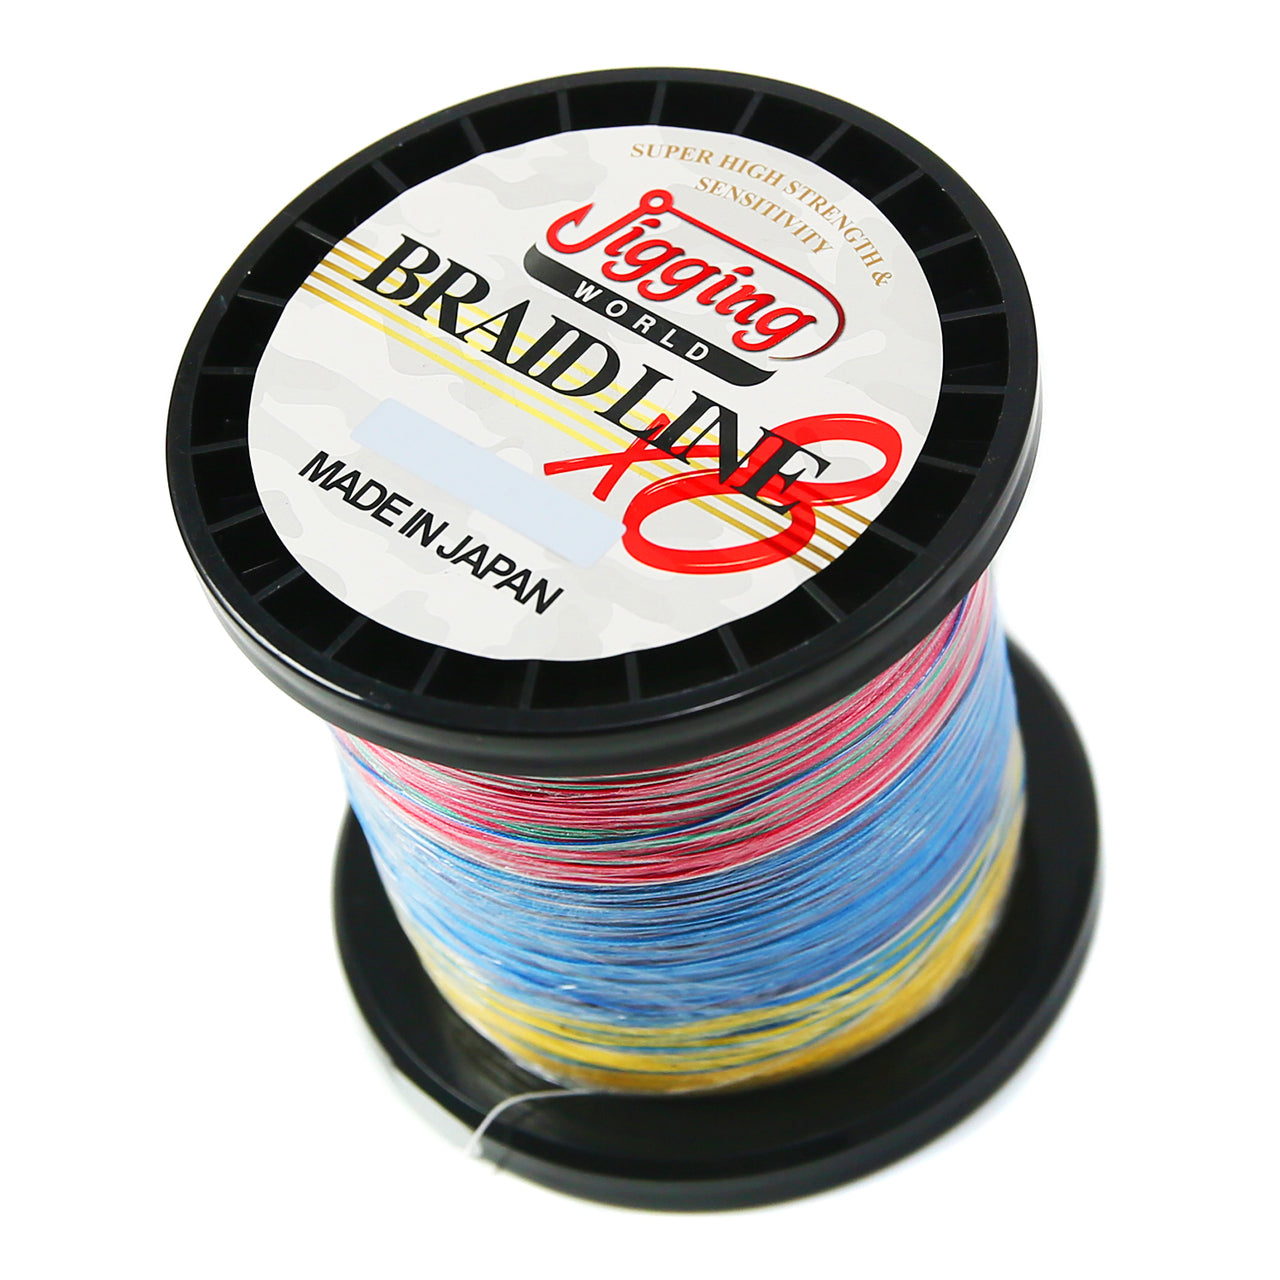 Jigging World x8 Braided Line Multicolor 600 Meter / 50